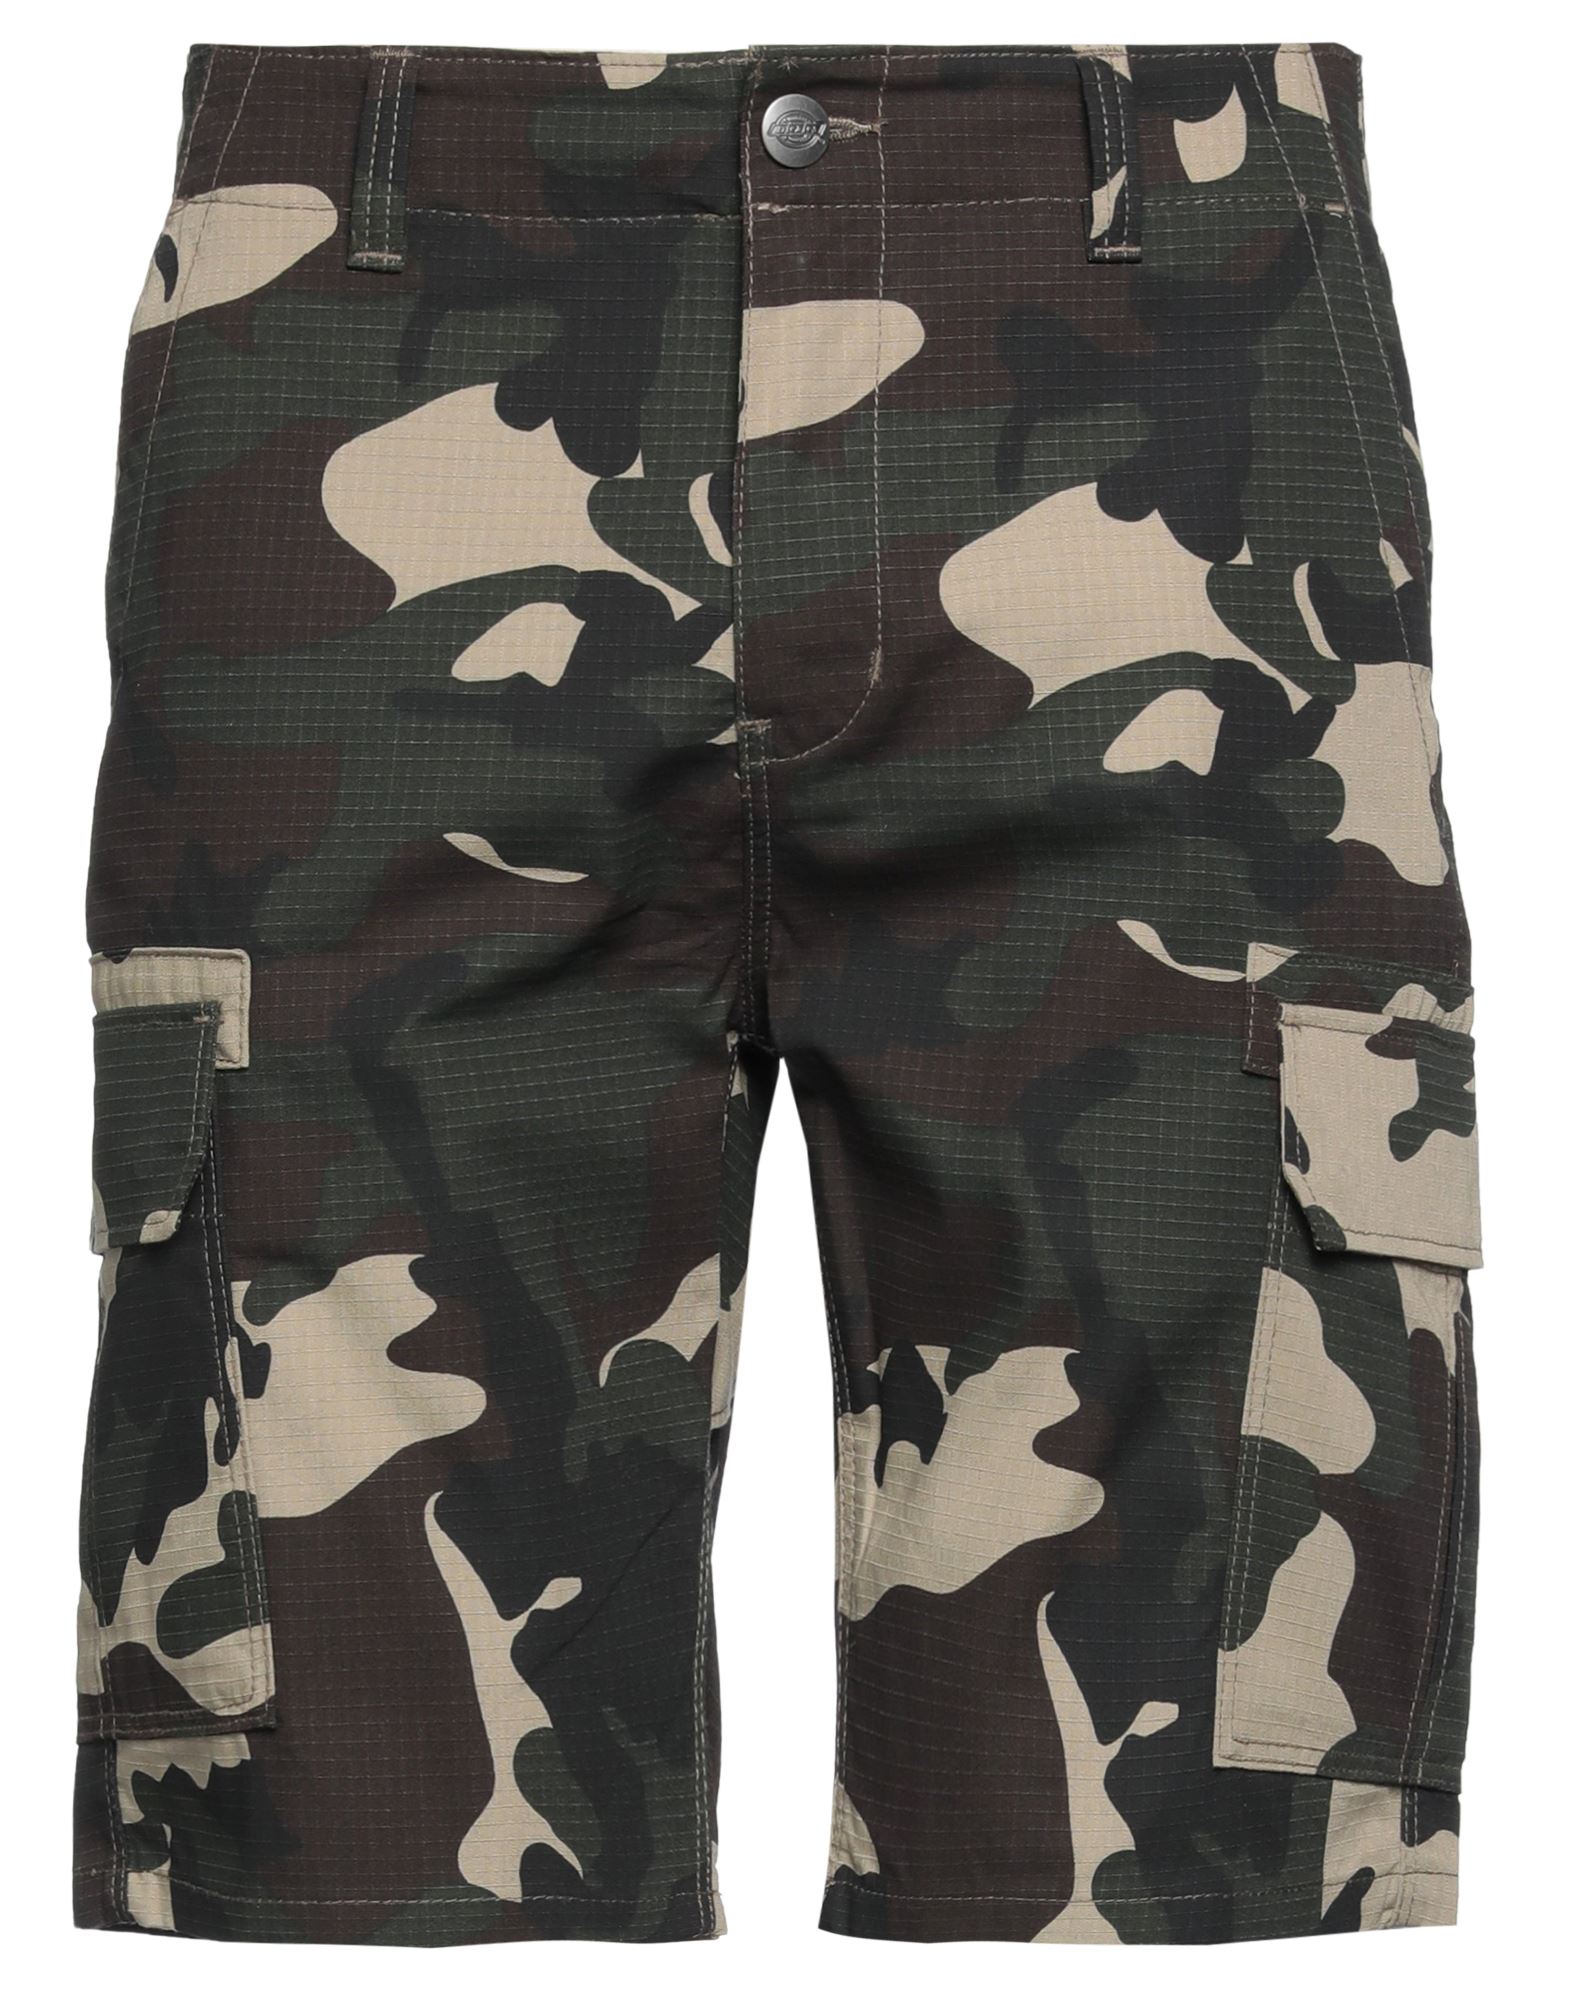 Dickies Man Shorts & Bermuda Shorts Military Green Size 31 Cotton